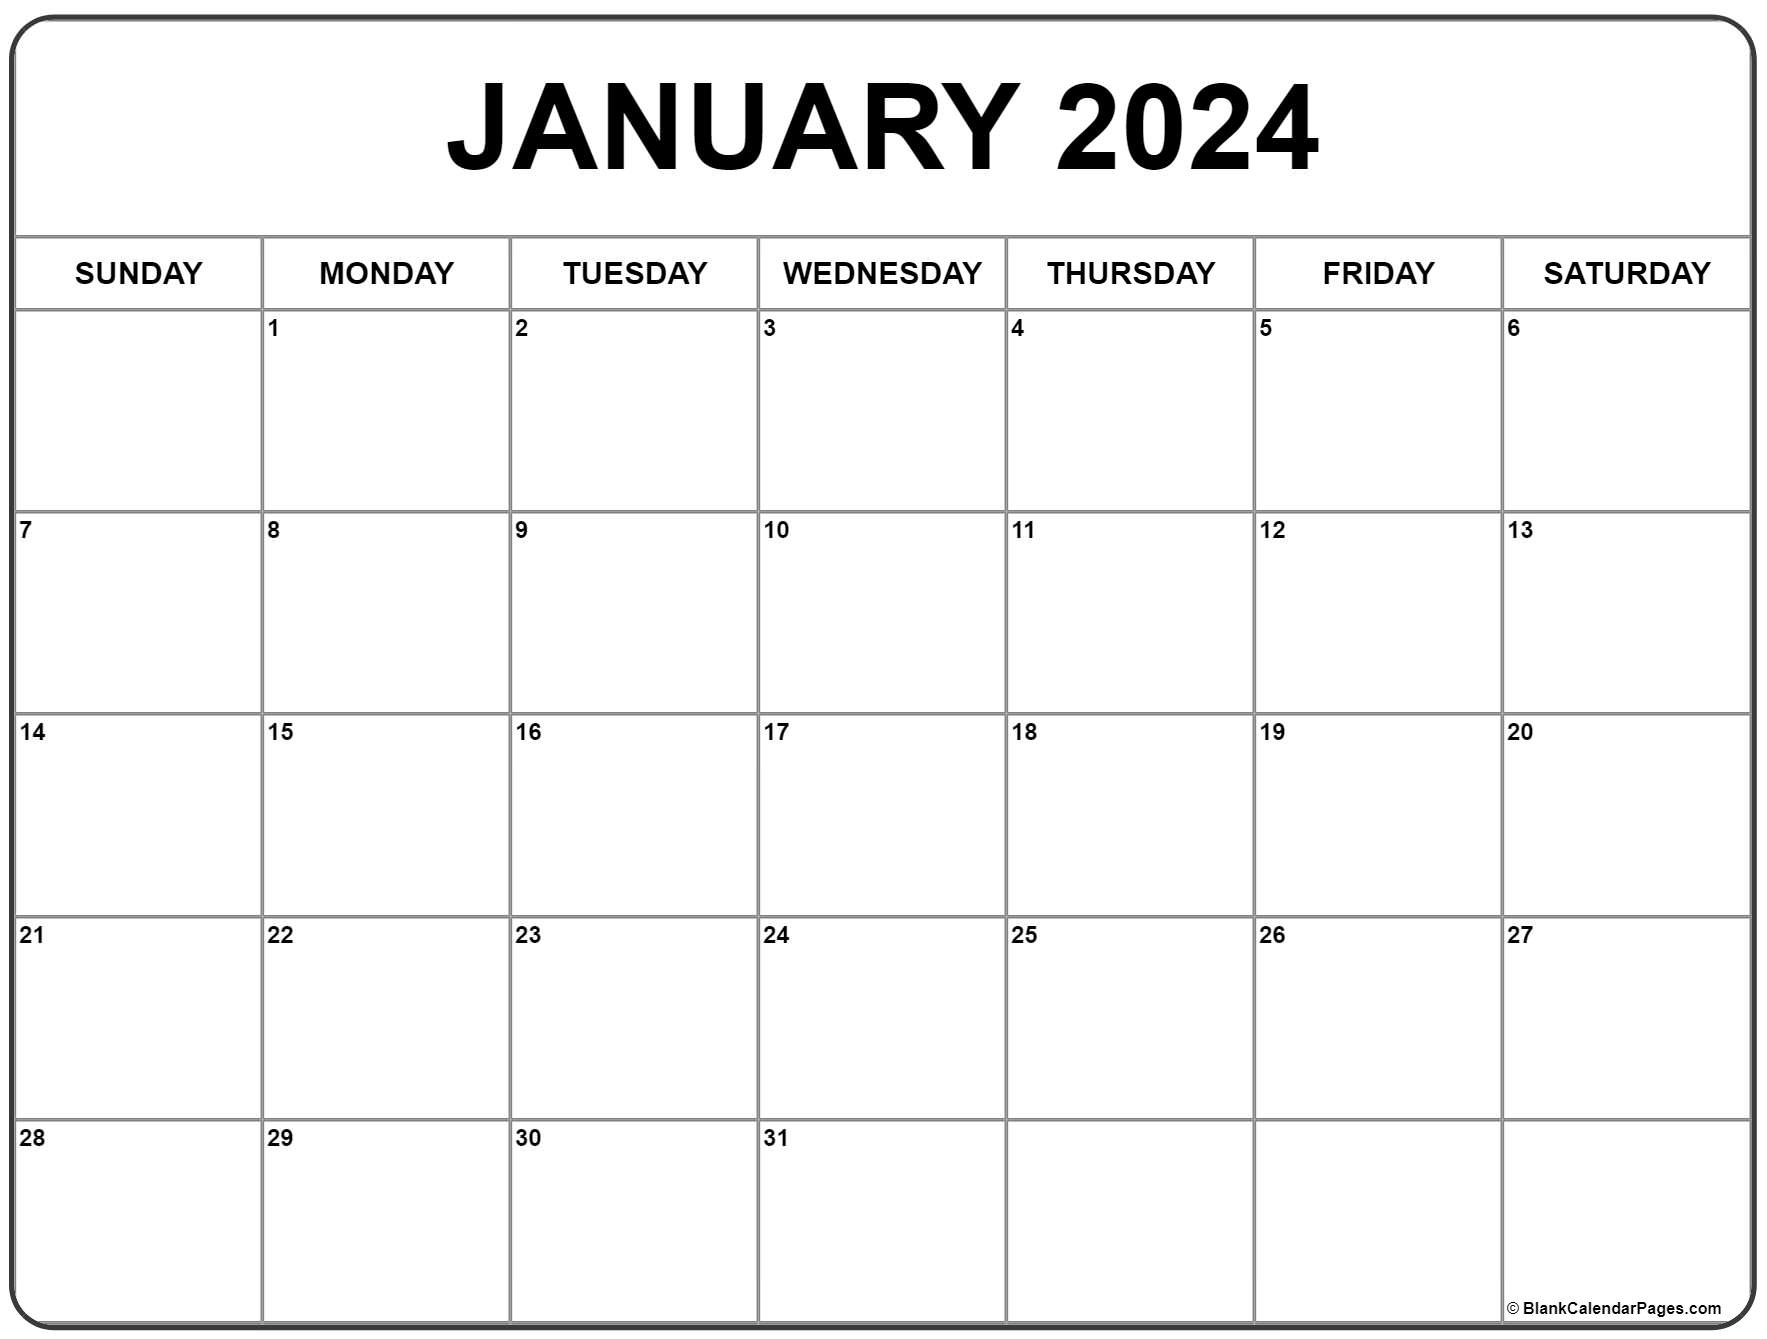 January 2024 Calendar | Free Printable Calendar for Free Printable January Calendar 2024